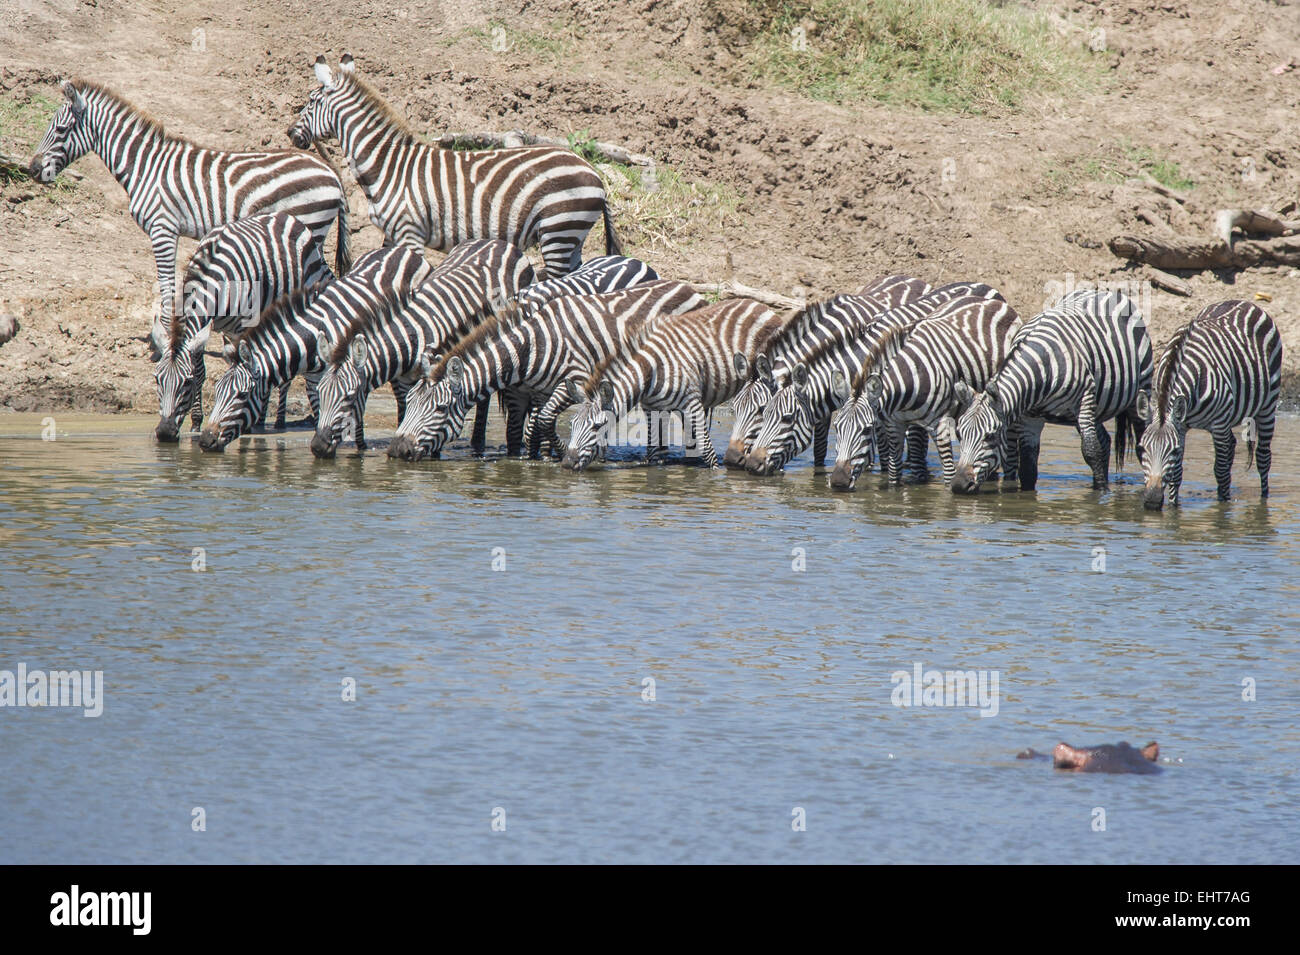 Gnu,Zebra,Crossing and     Fotodienst Schreyer 0049 172 162 5407 www.sportfoto-schreyer.jimdo.com Afrika,Kenia, Massai Mara 2015 Stock Photo